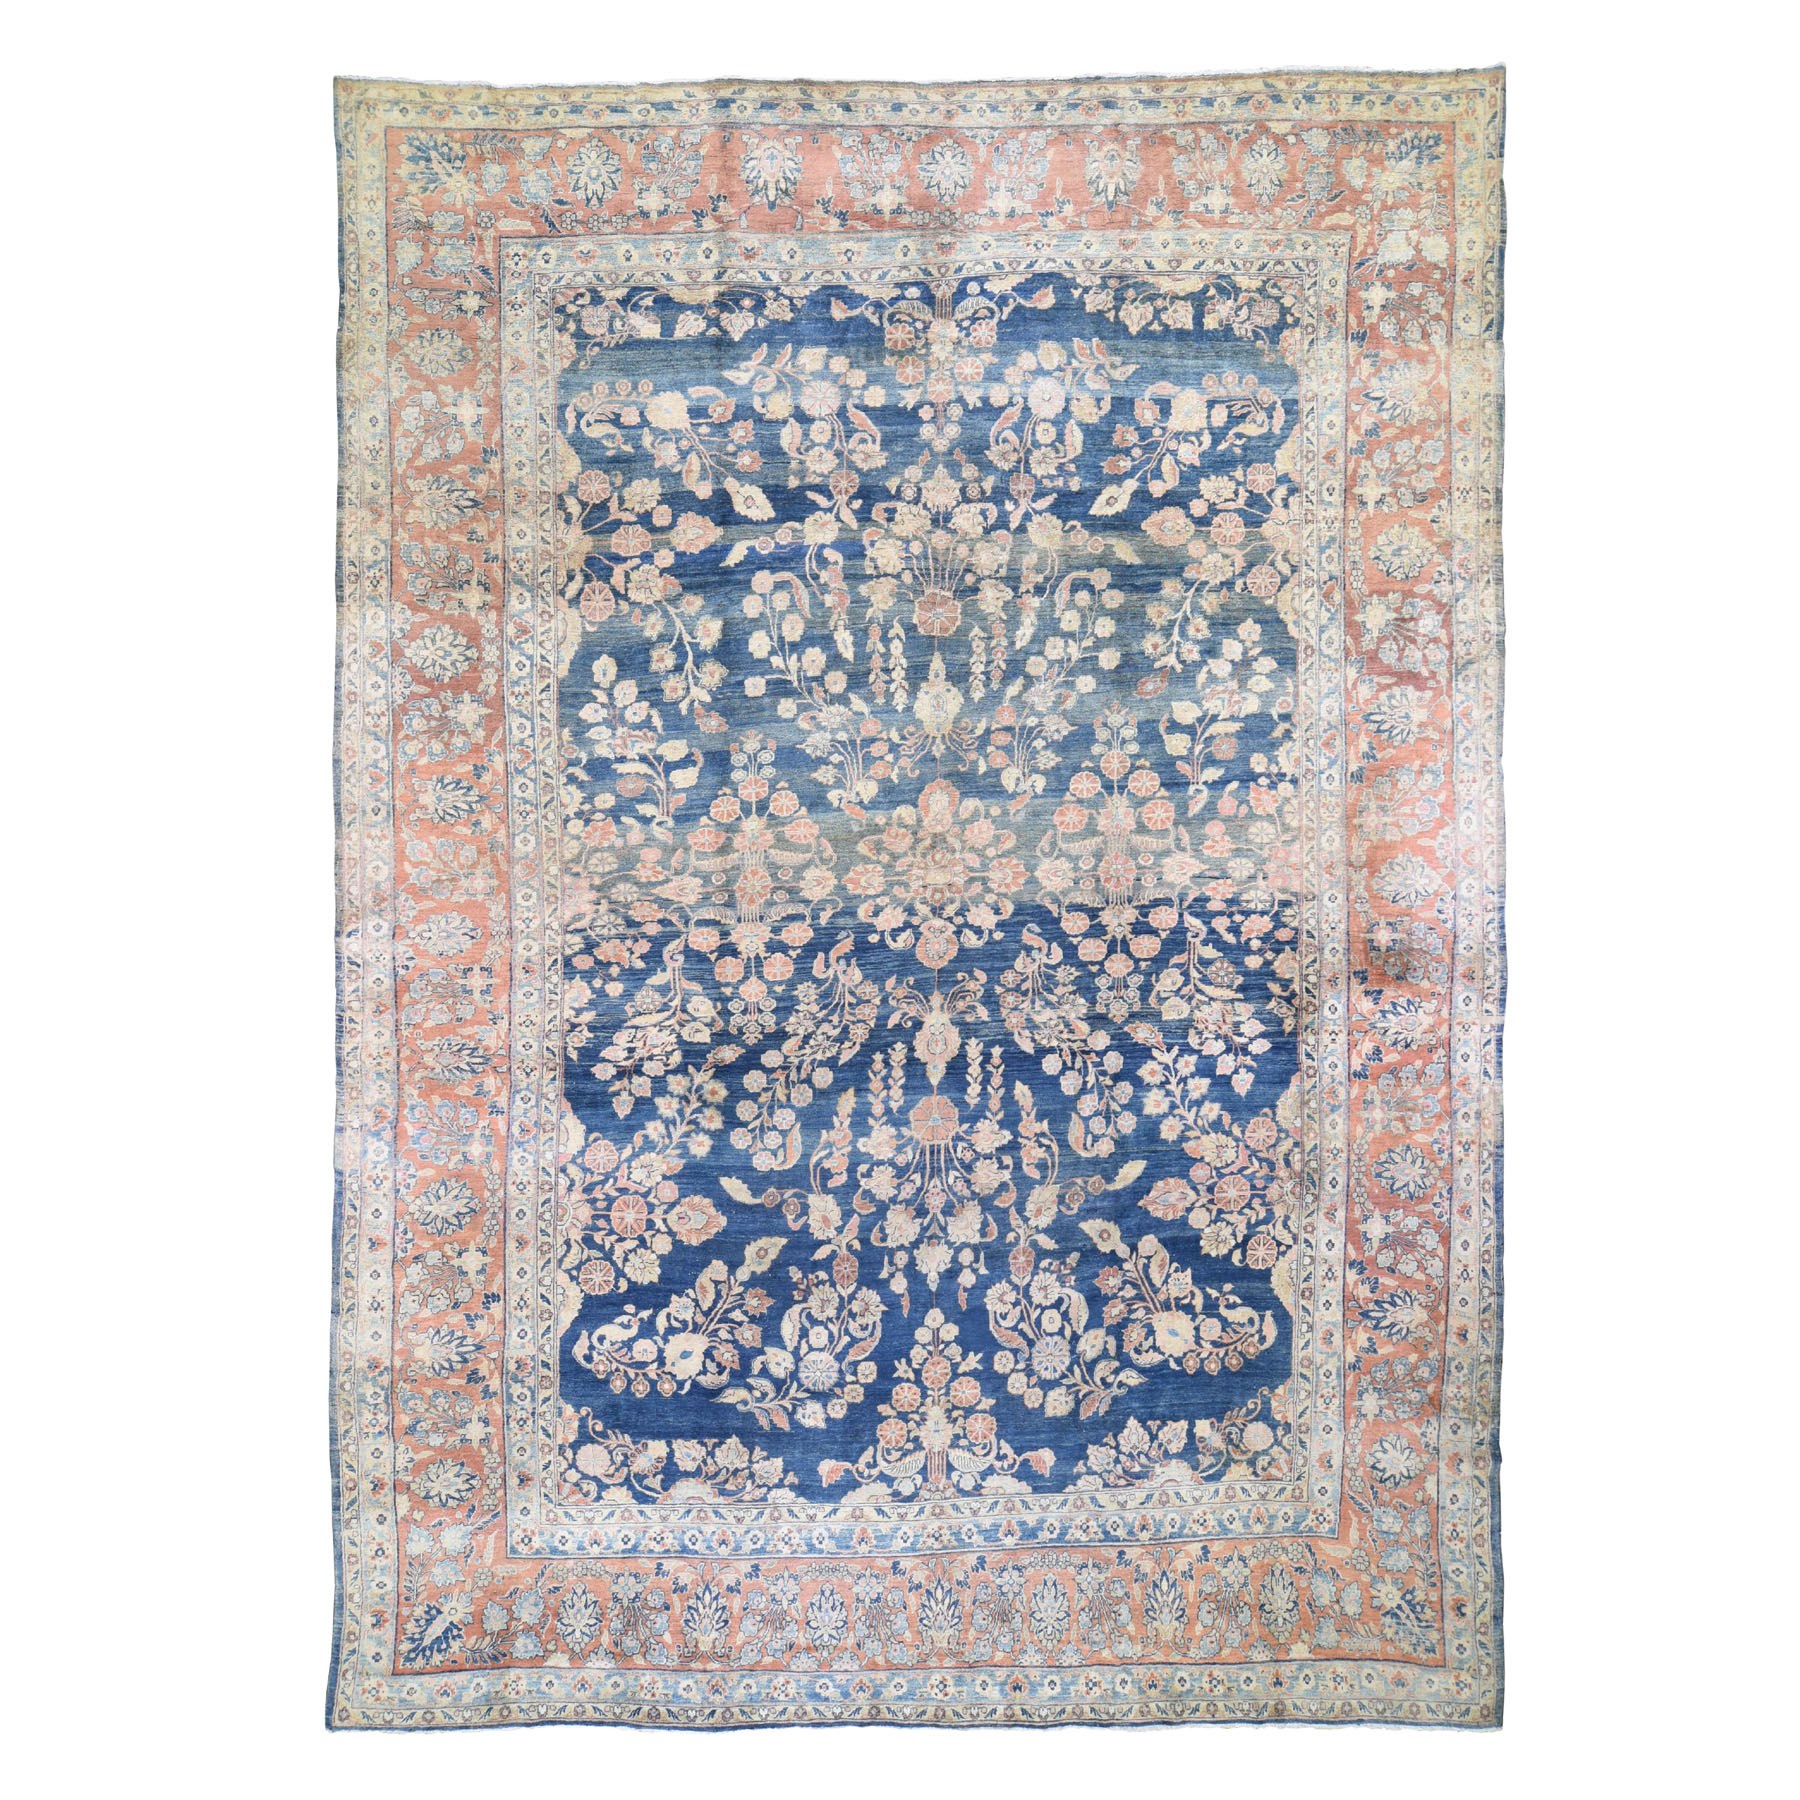 10-7 x14-10  Blue Antique Persian Mohojaren Sarouk Full Soft Pile Abrush Hand Knotted Oriental Rug 